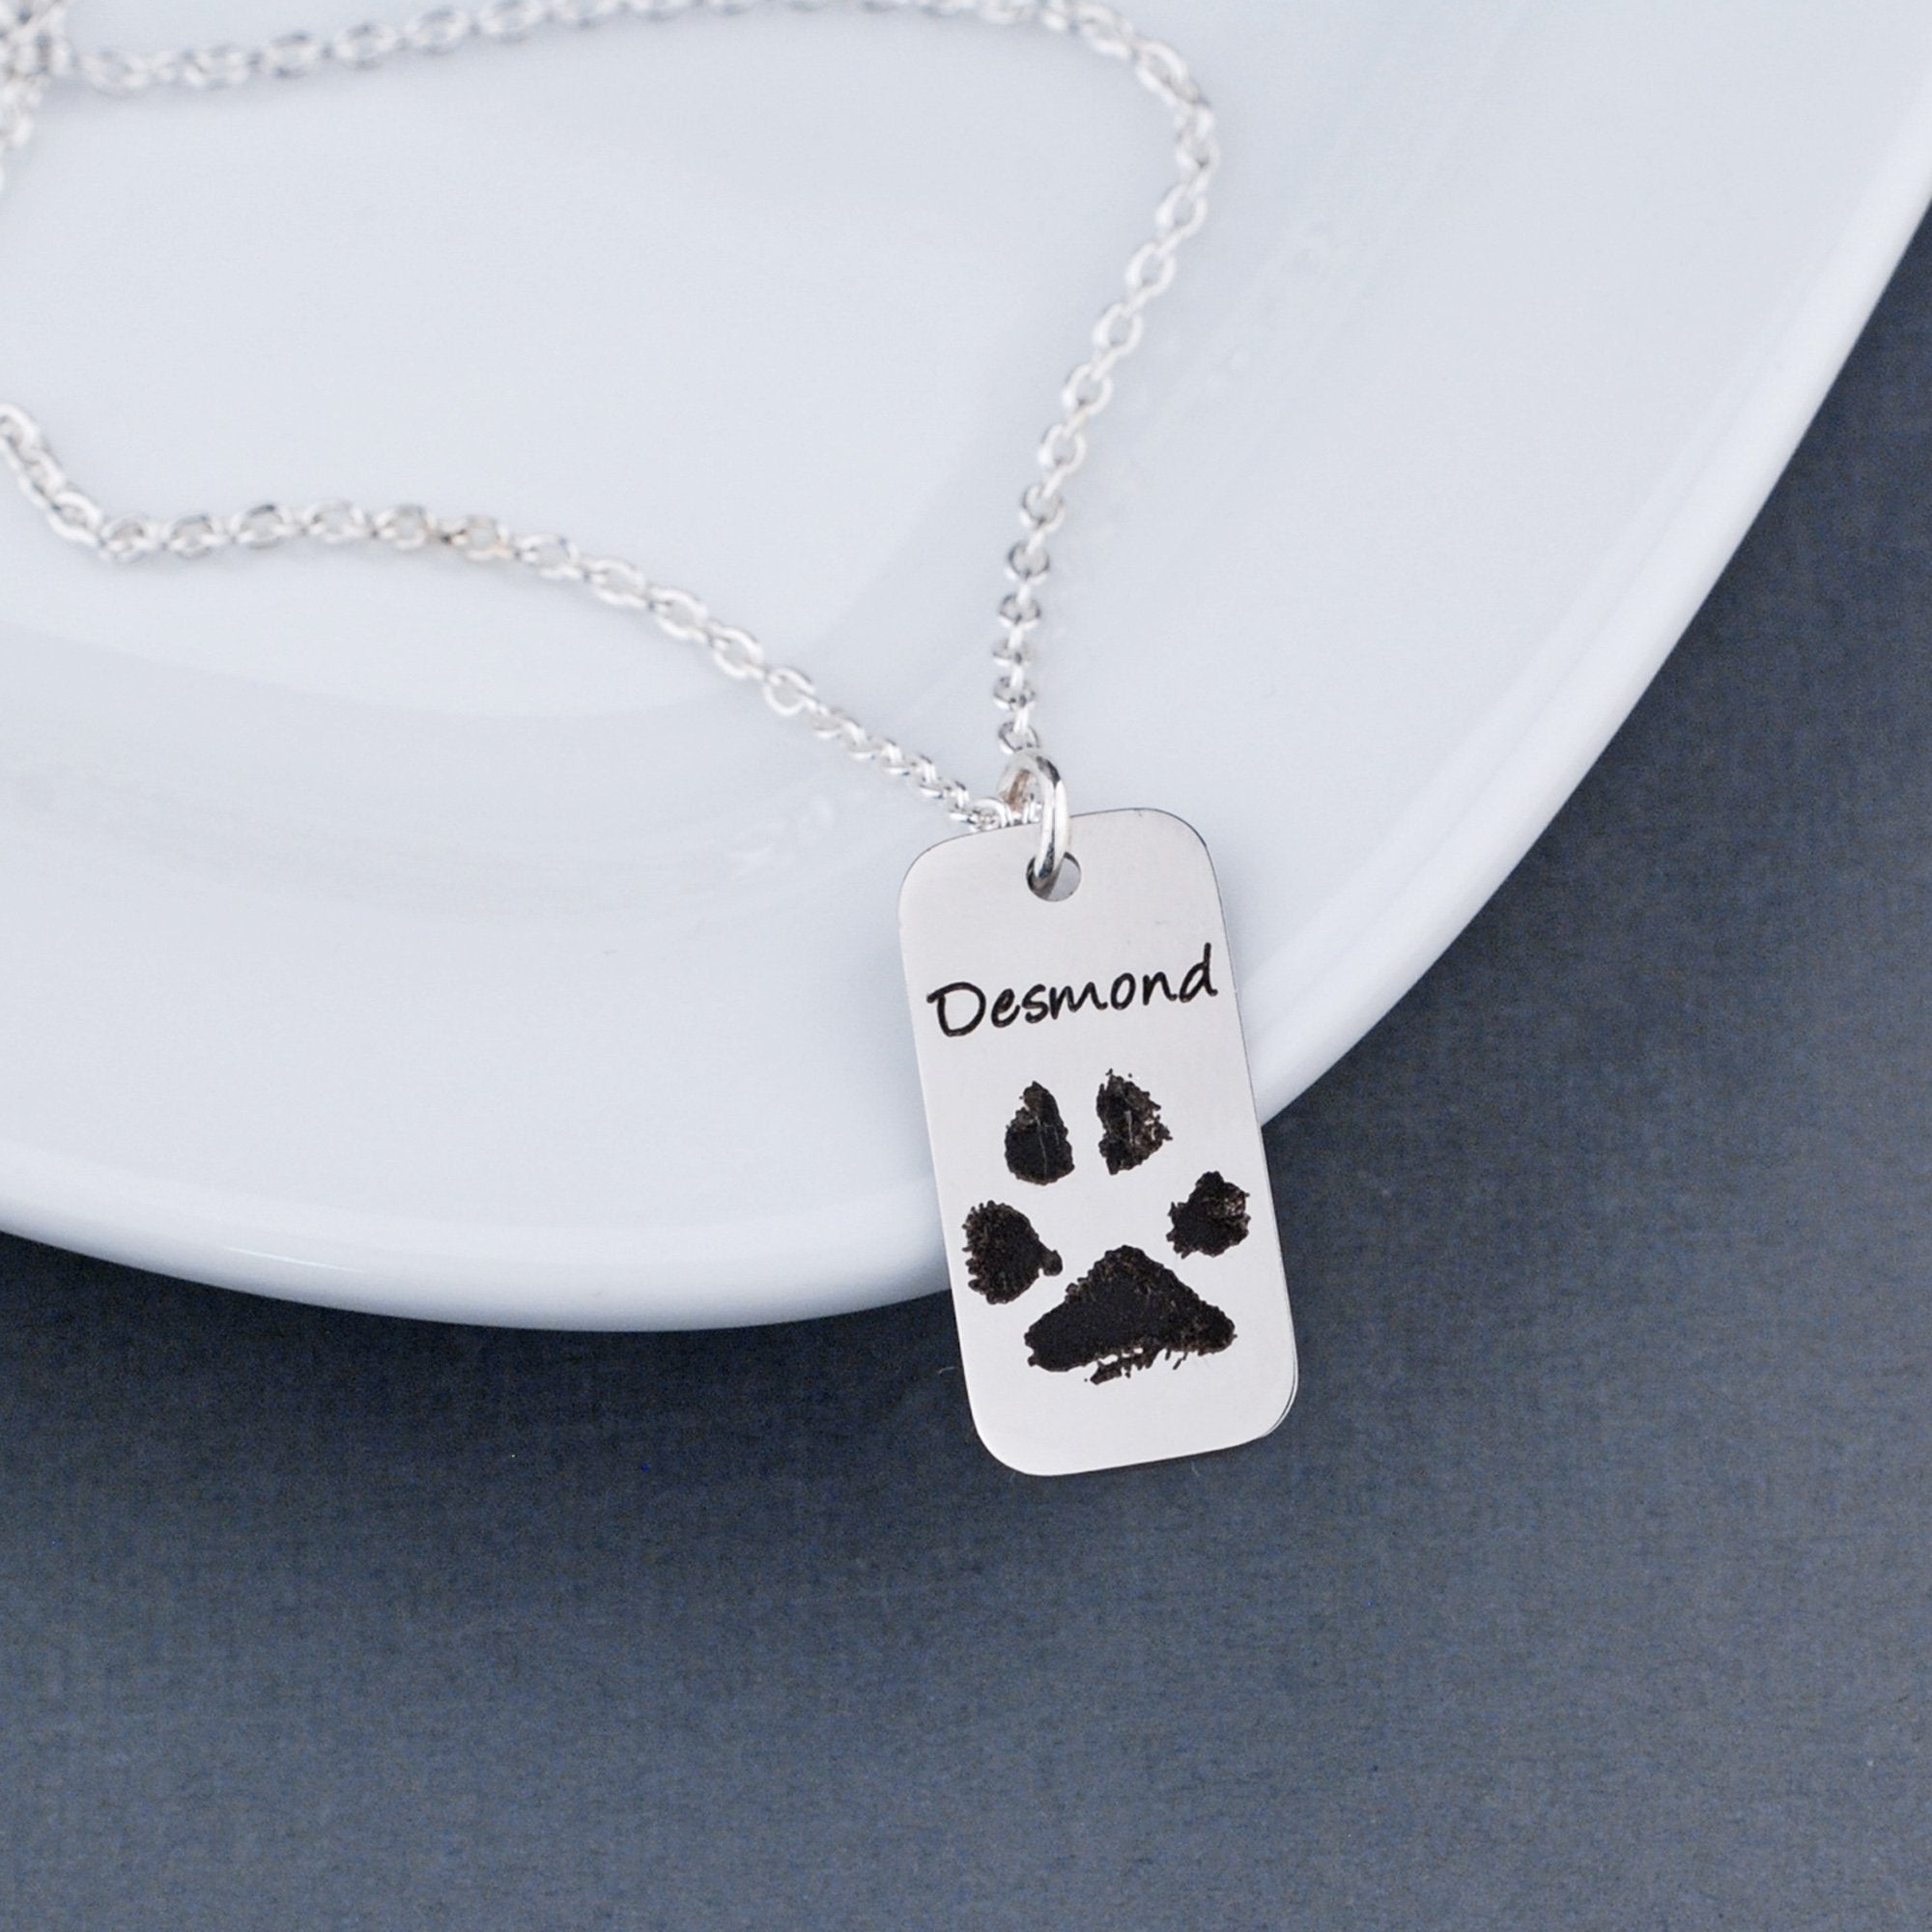 Pet Love Paw Print Necklace Black & White Diamond Sterling Silver 18